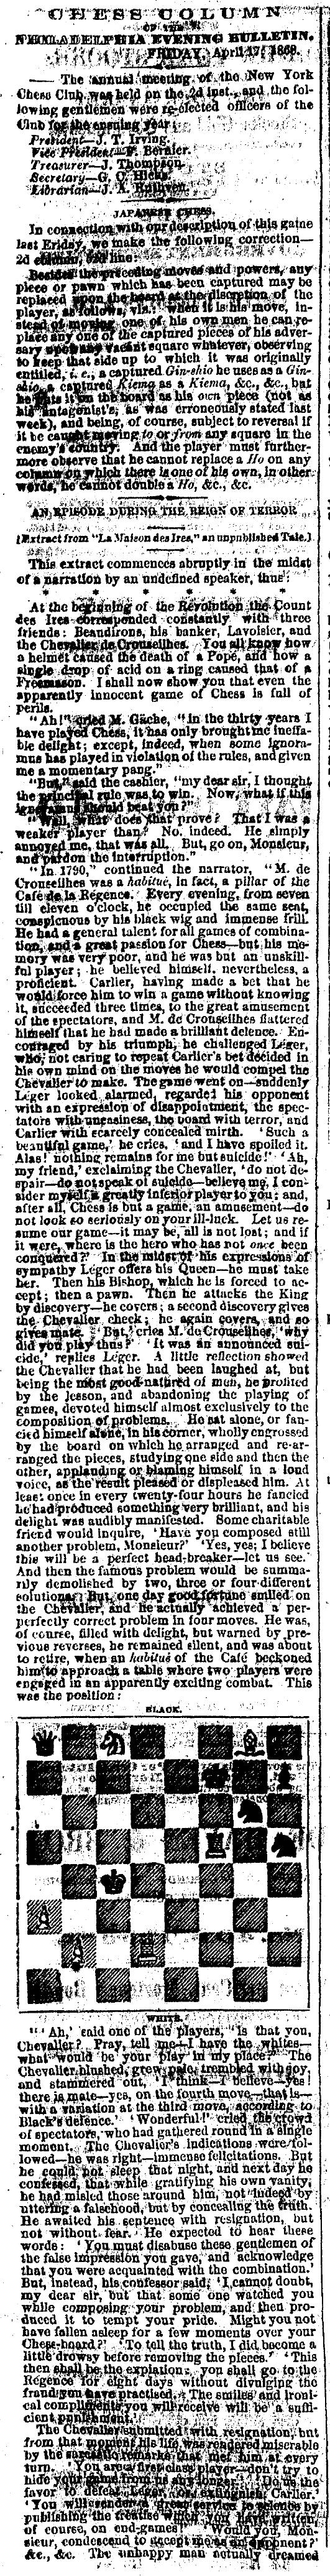 1868.04.17-01 Philadelphia Daily Evening Bulletin.jpg